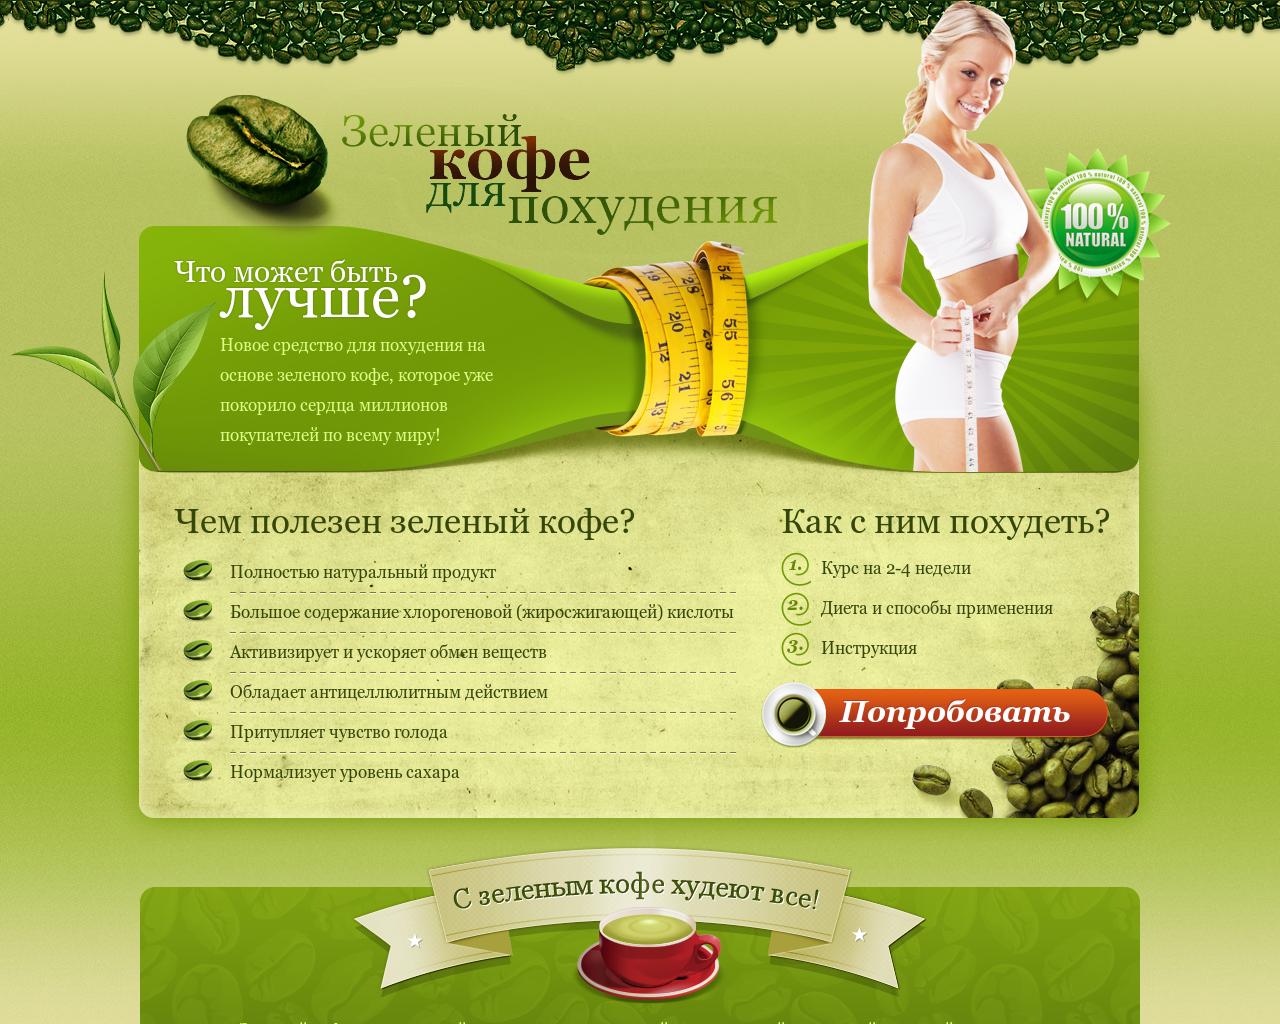 Изображение сайта green-coffe.ru в разрешении 1280x1024